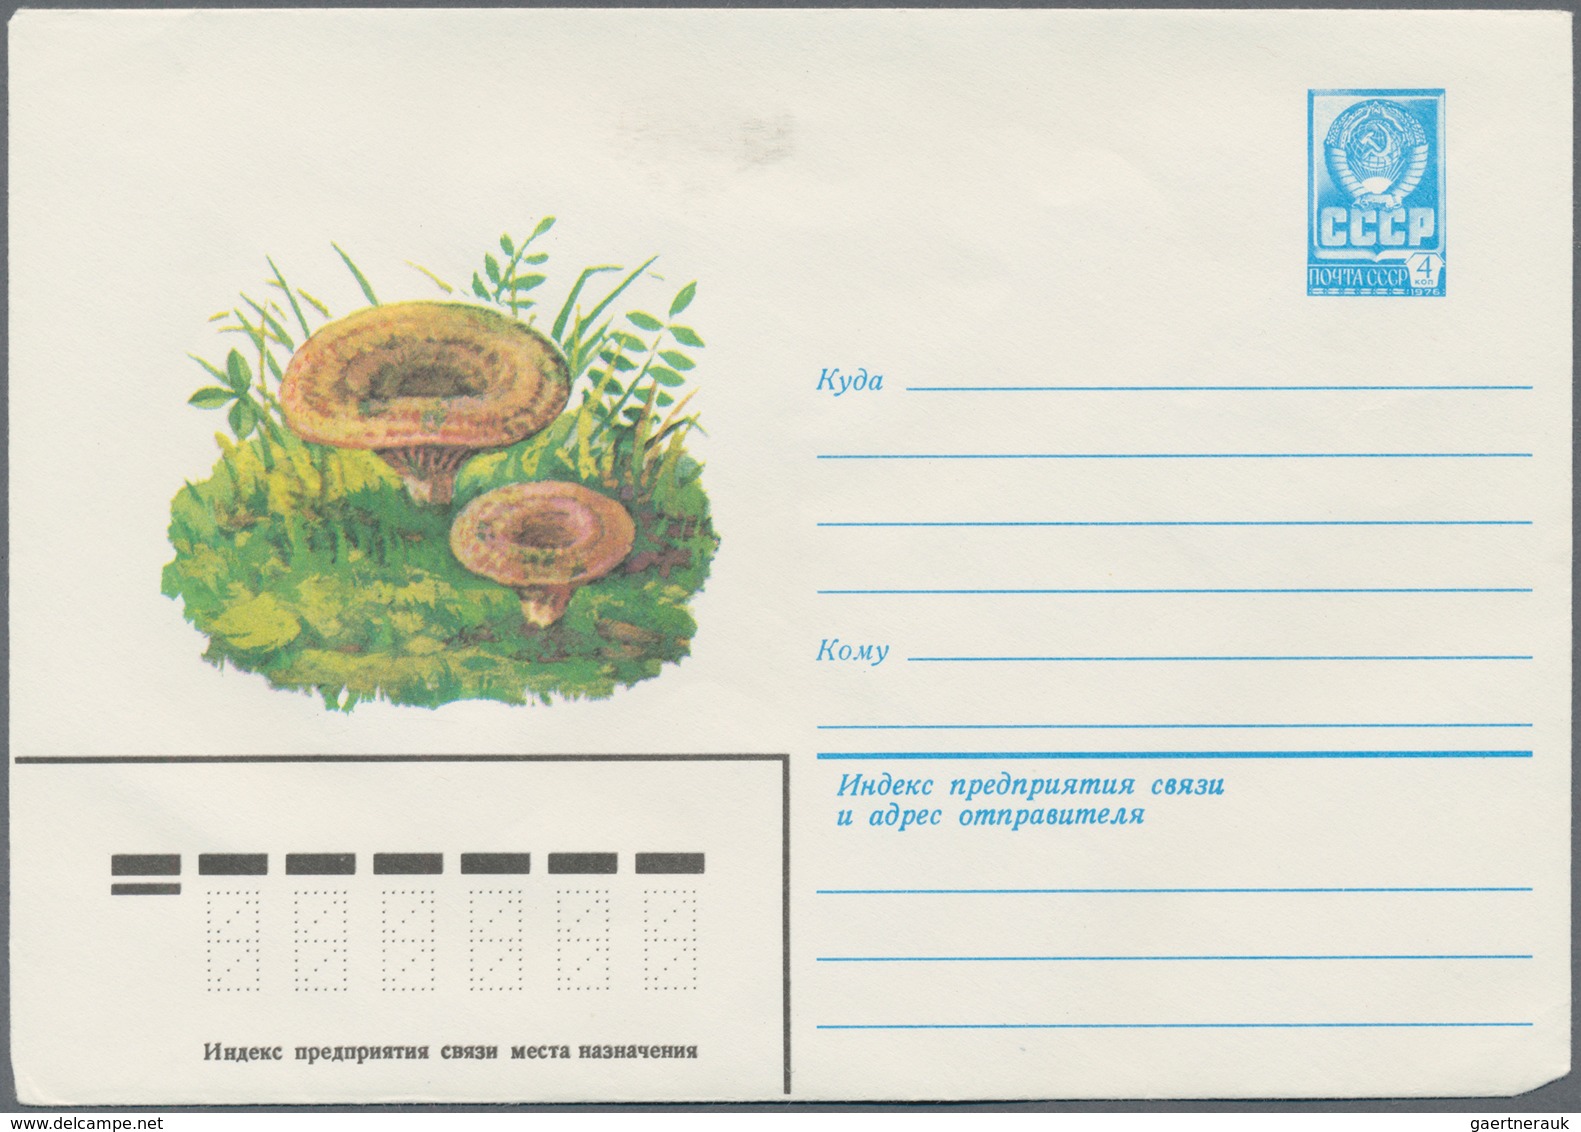 Sowjetunion - Ganzsachen: 1979 accumulation of ca. 1.240 unused picture postal stationery envelopes,